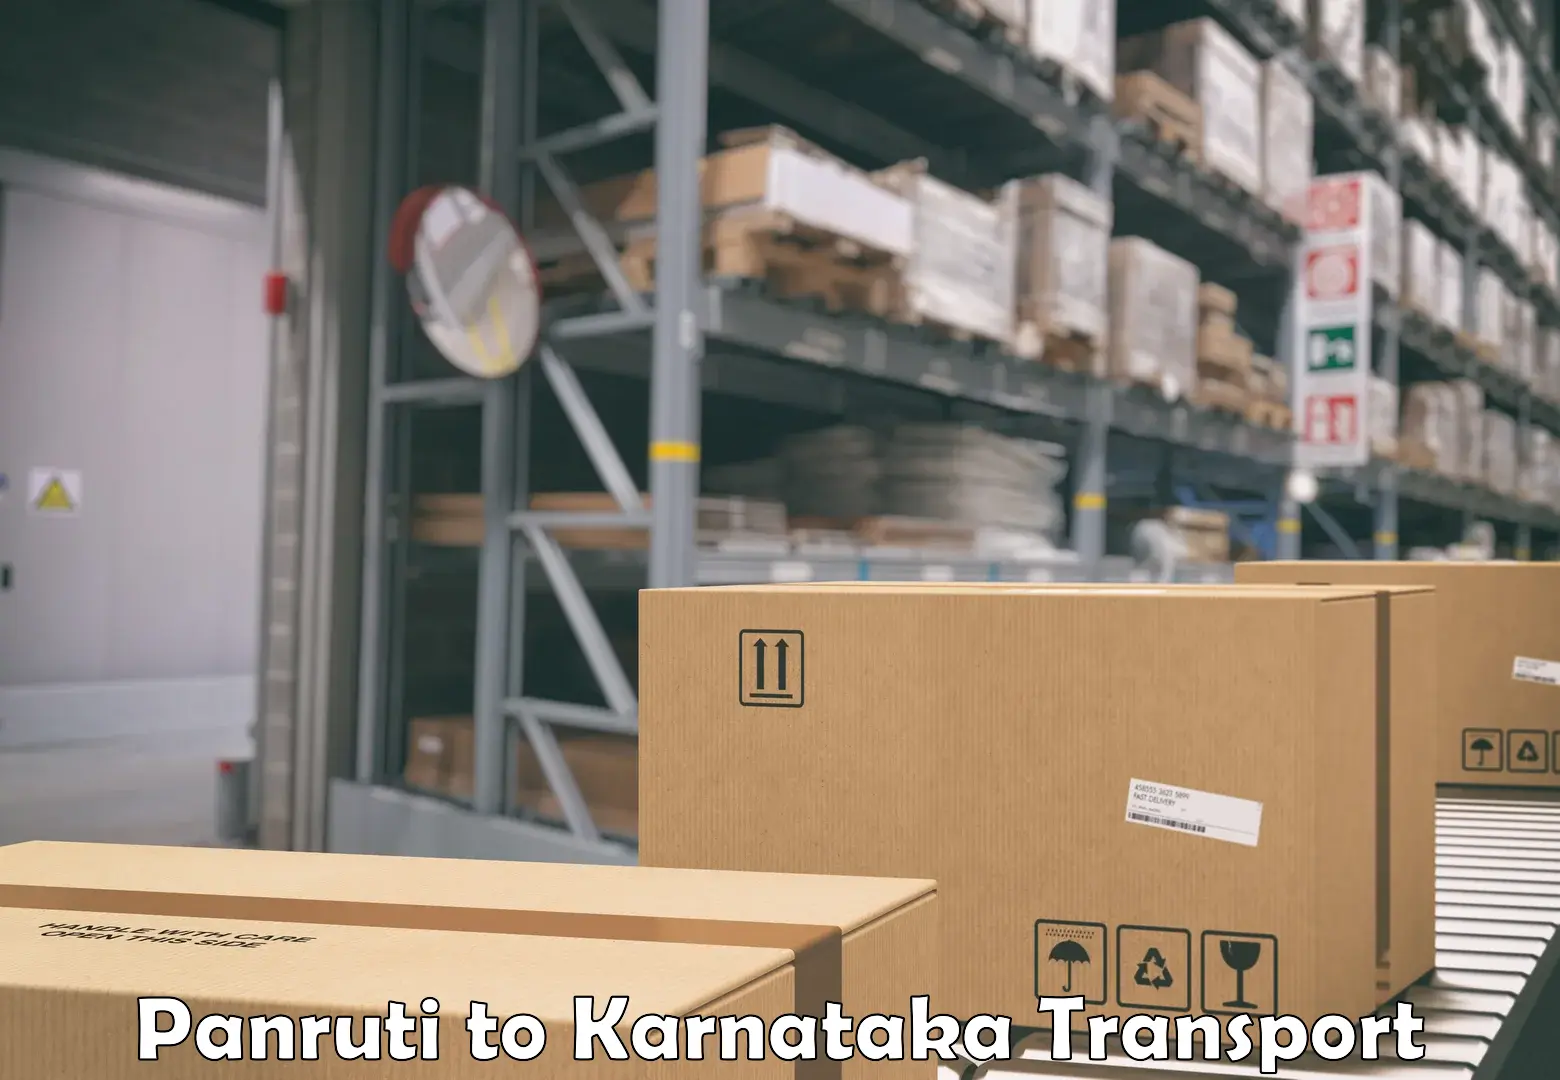 Truck transport companies in India Panruti to Karnataka